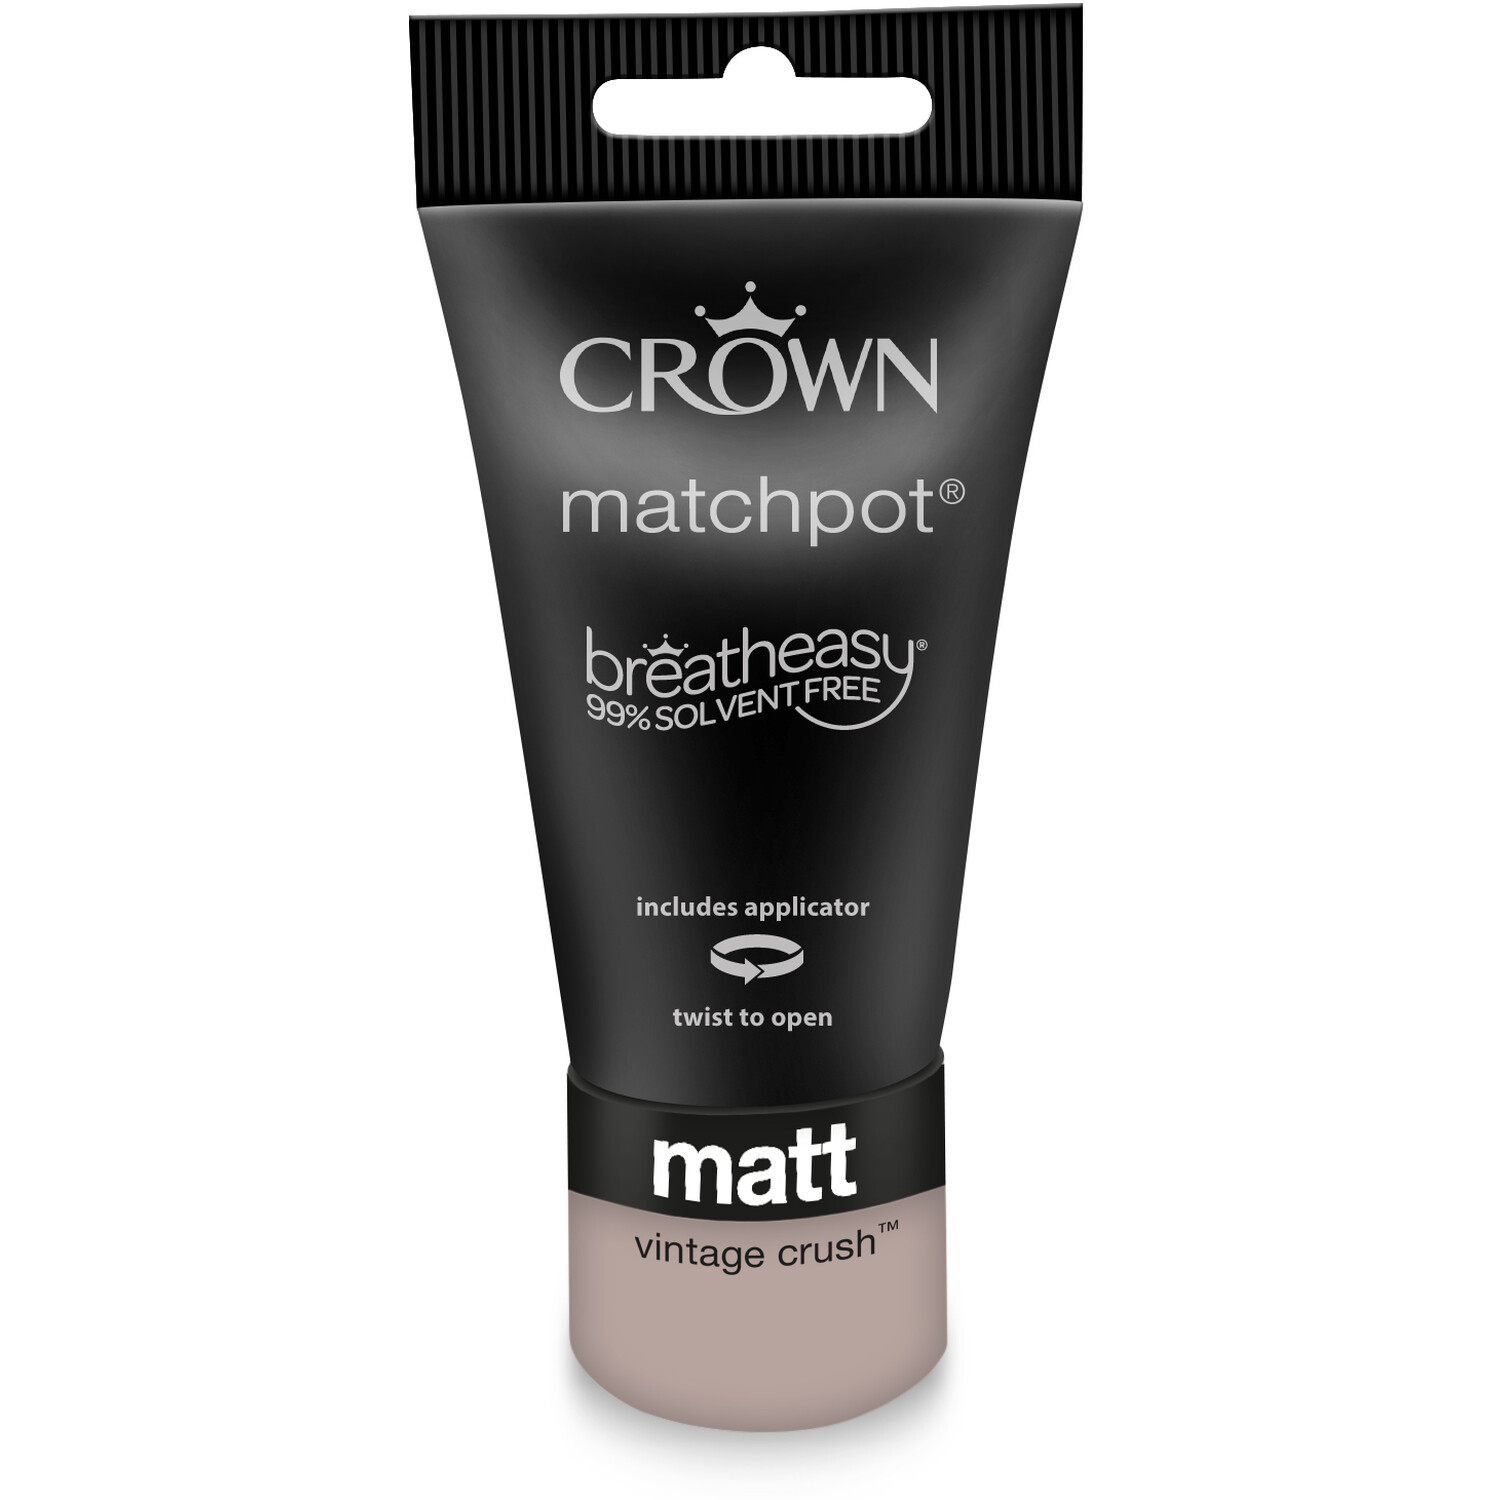 Crown Breatheasy Vintage Crush Matt Feature Wall Tester Pot 40ml Image